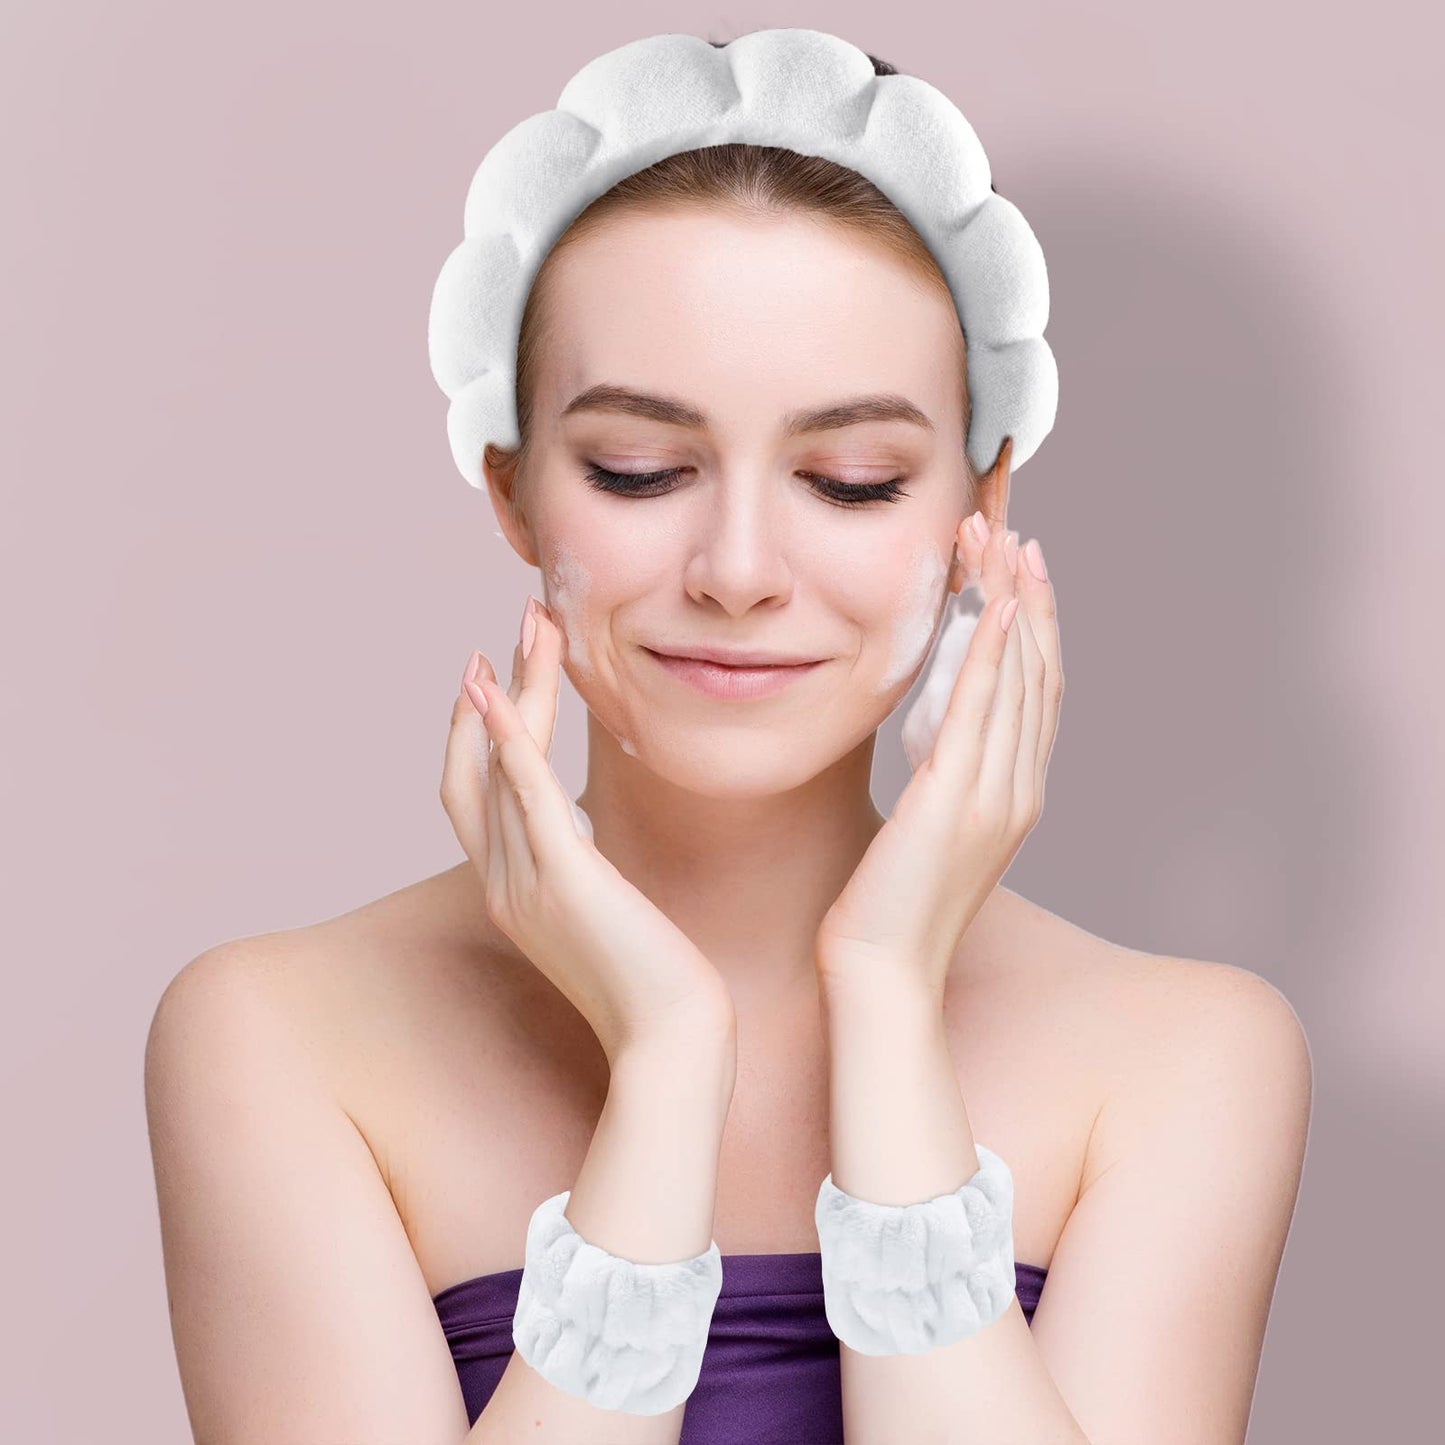 Spa Headband for Washing Face, Sponge Skincare Headband and Wrist Washband Set White Makeup Headband for Skincare, Shower for Women